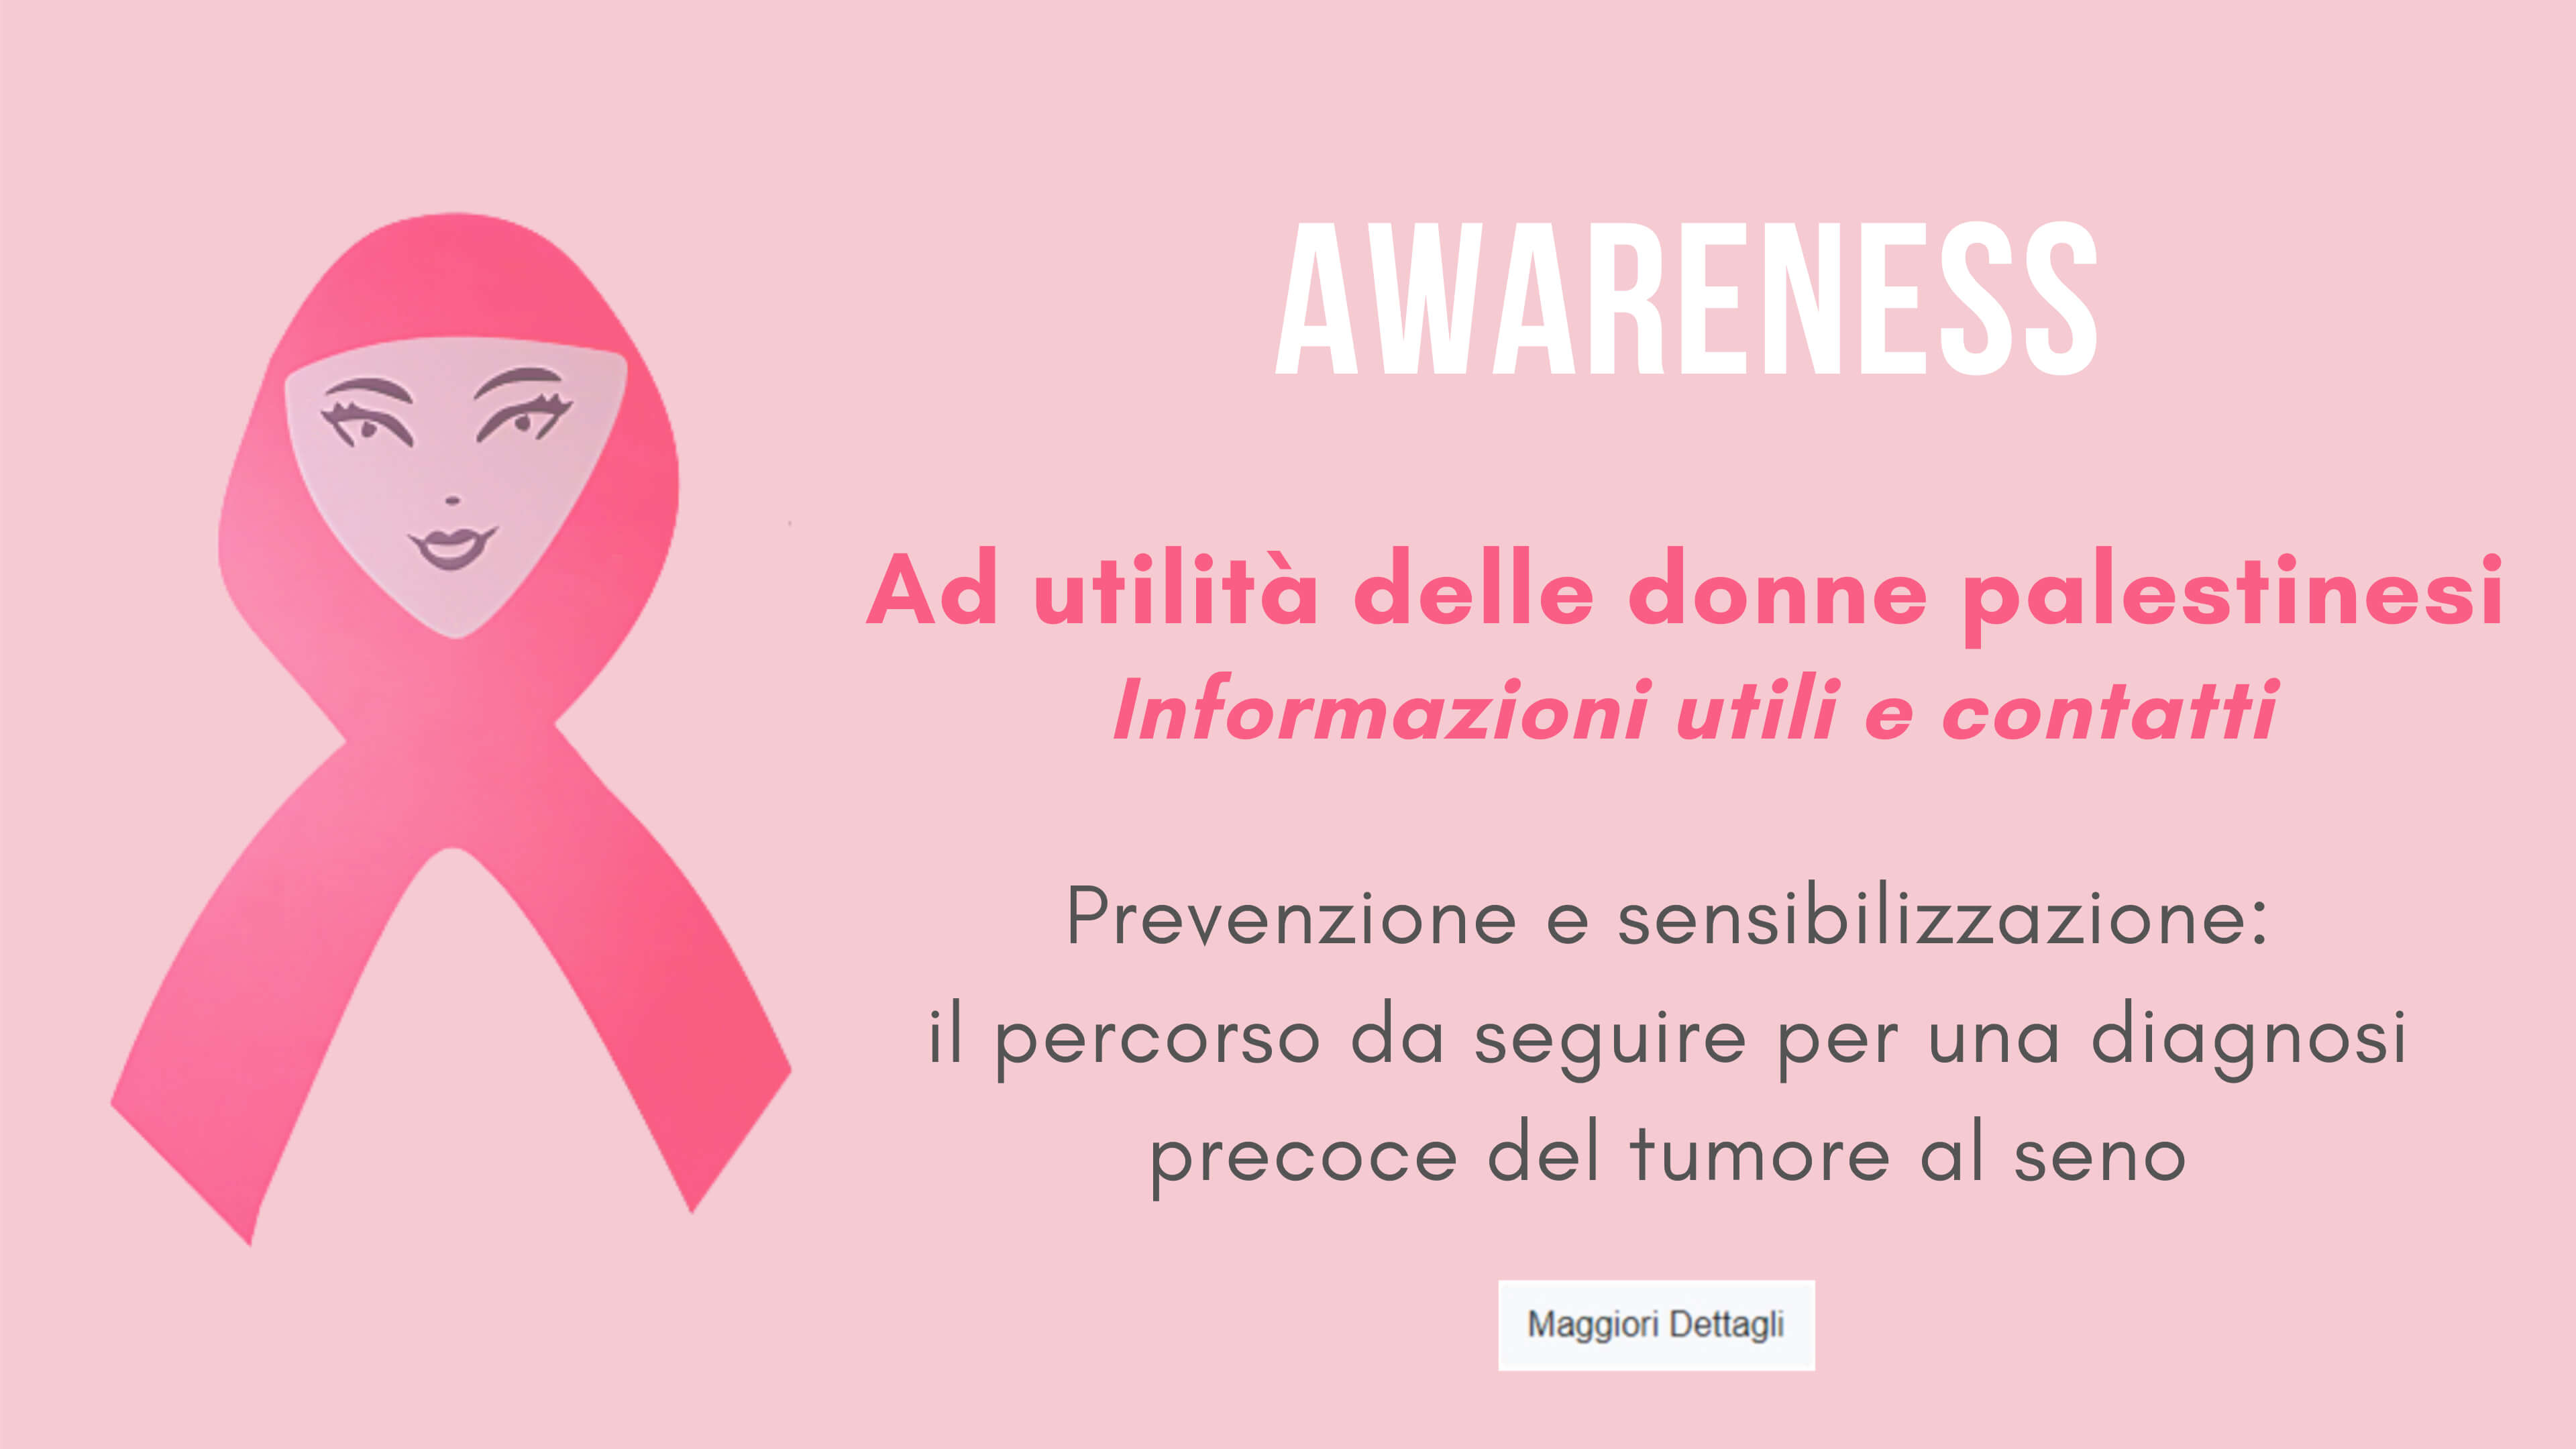 Awareness background image